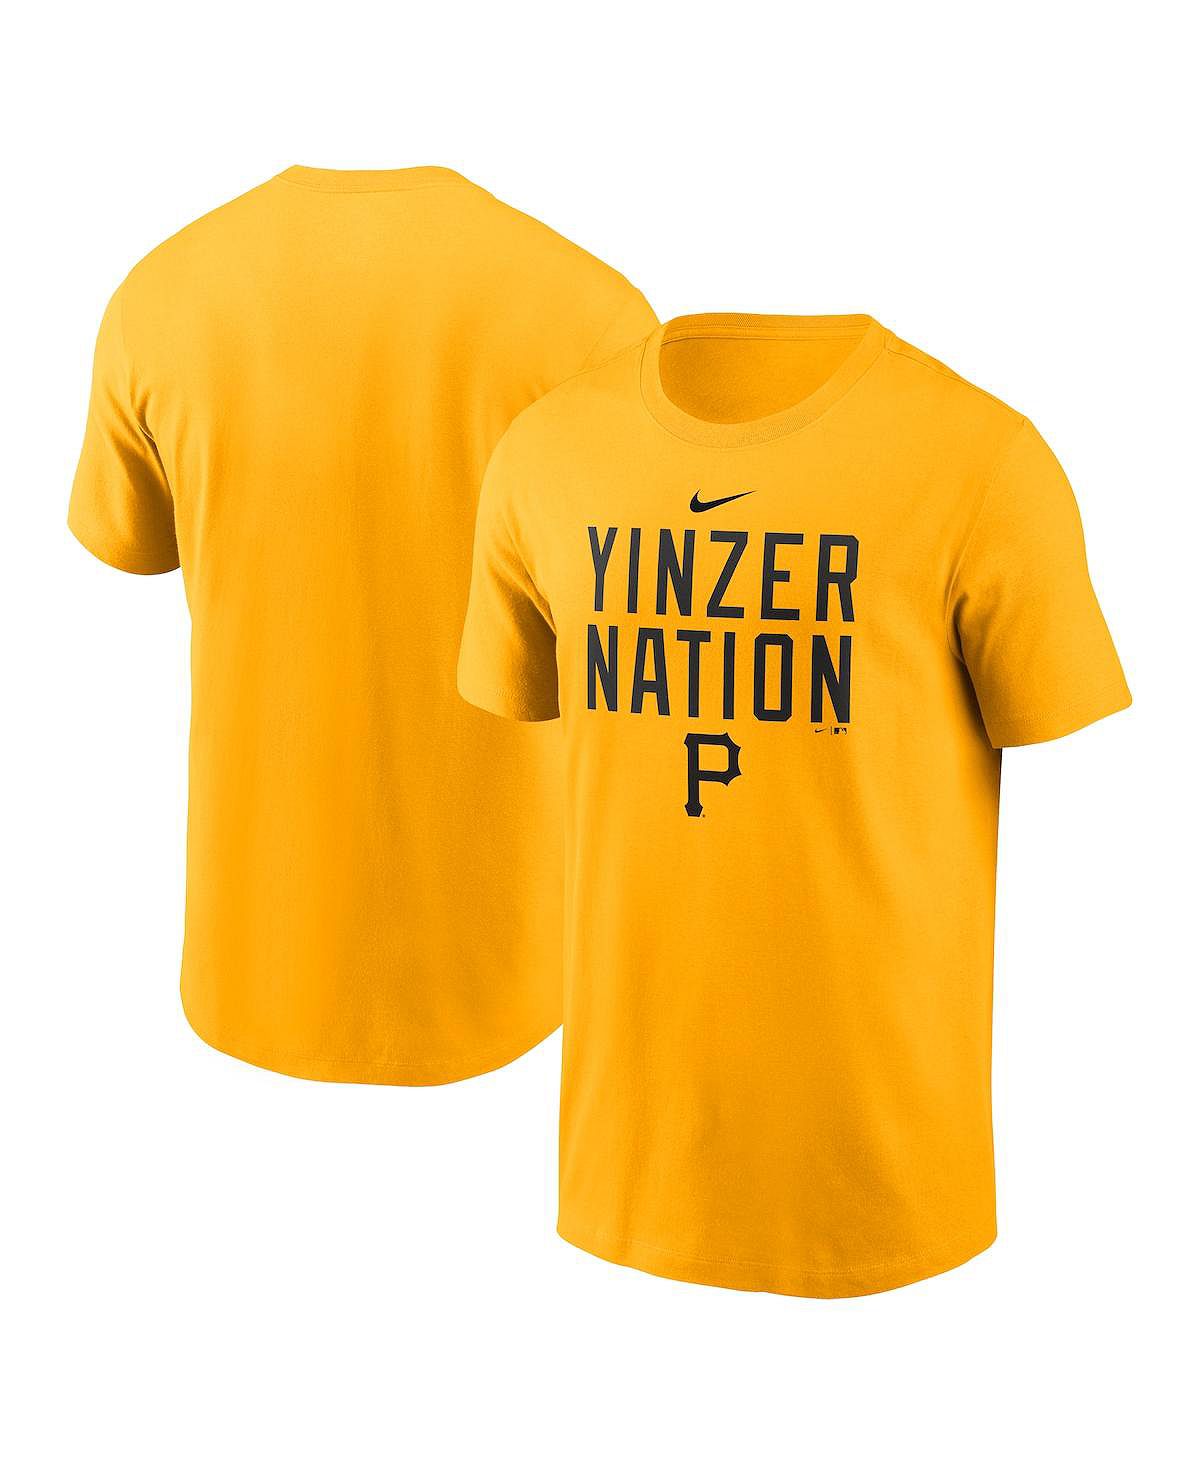 Мужская золотая футболка pittsburgh pirates yinzer nation local team Nike